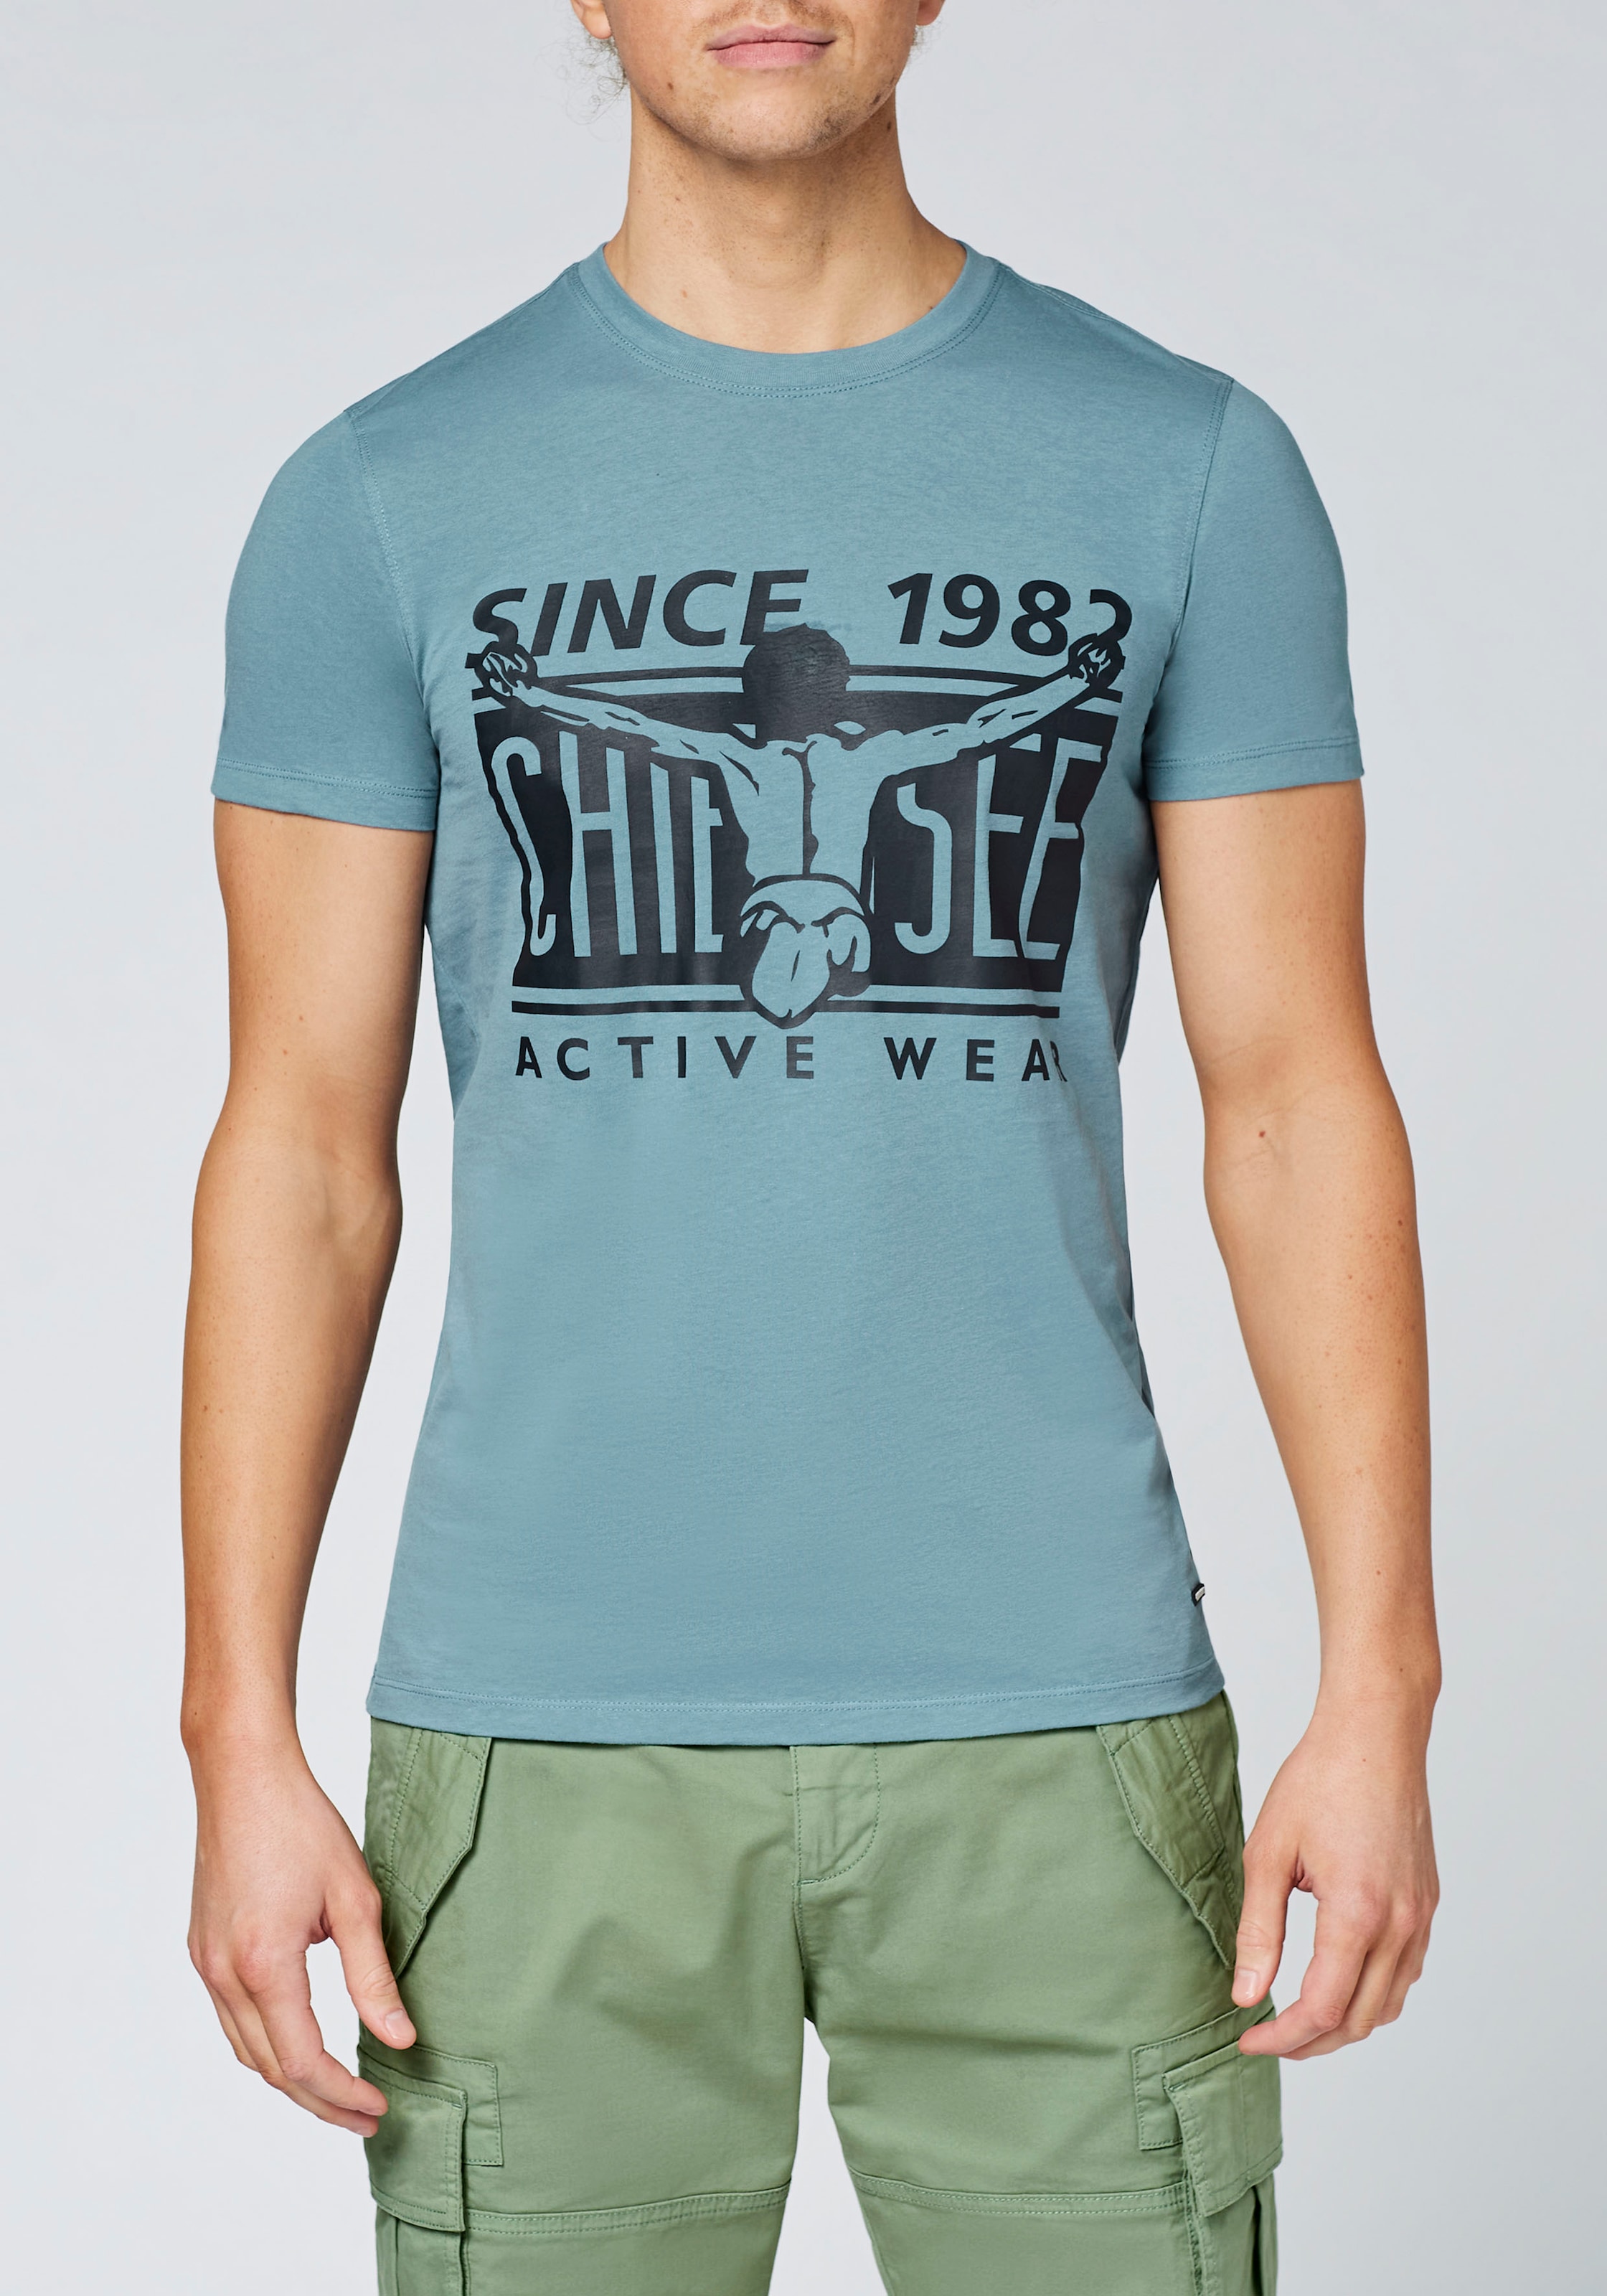 Chiemsee T-Shirt »BLUE STONE«